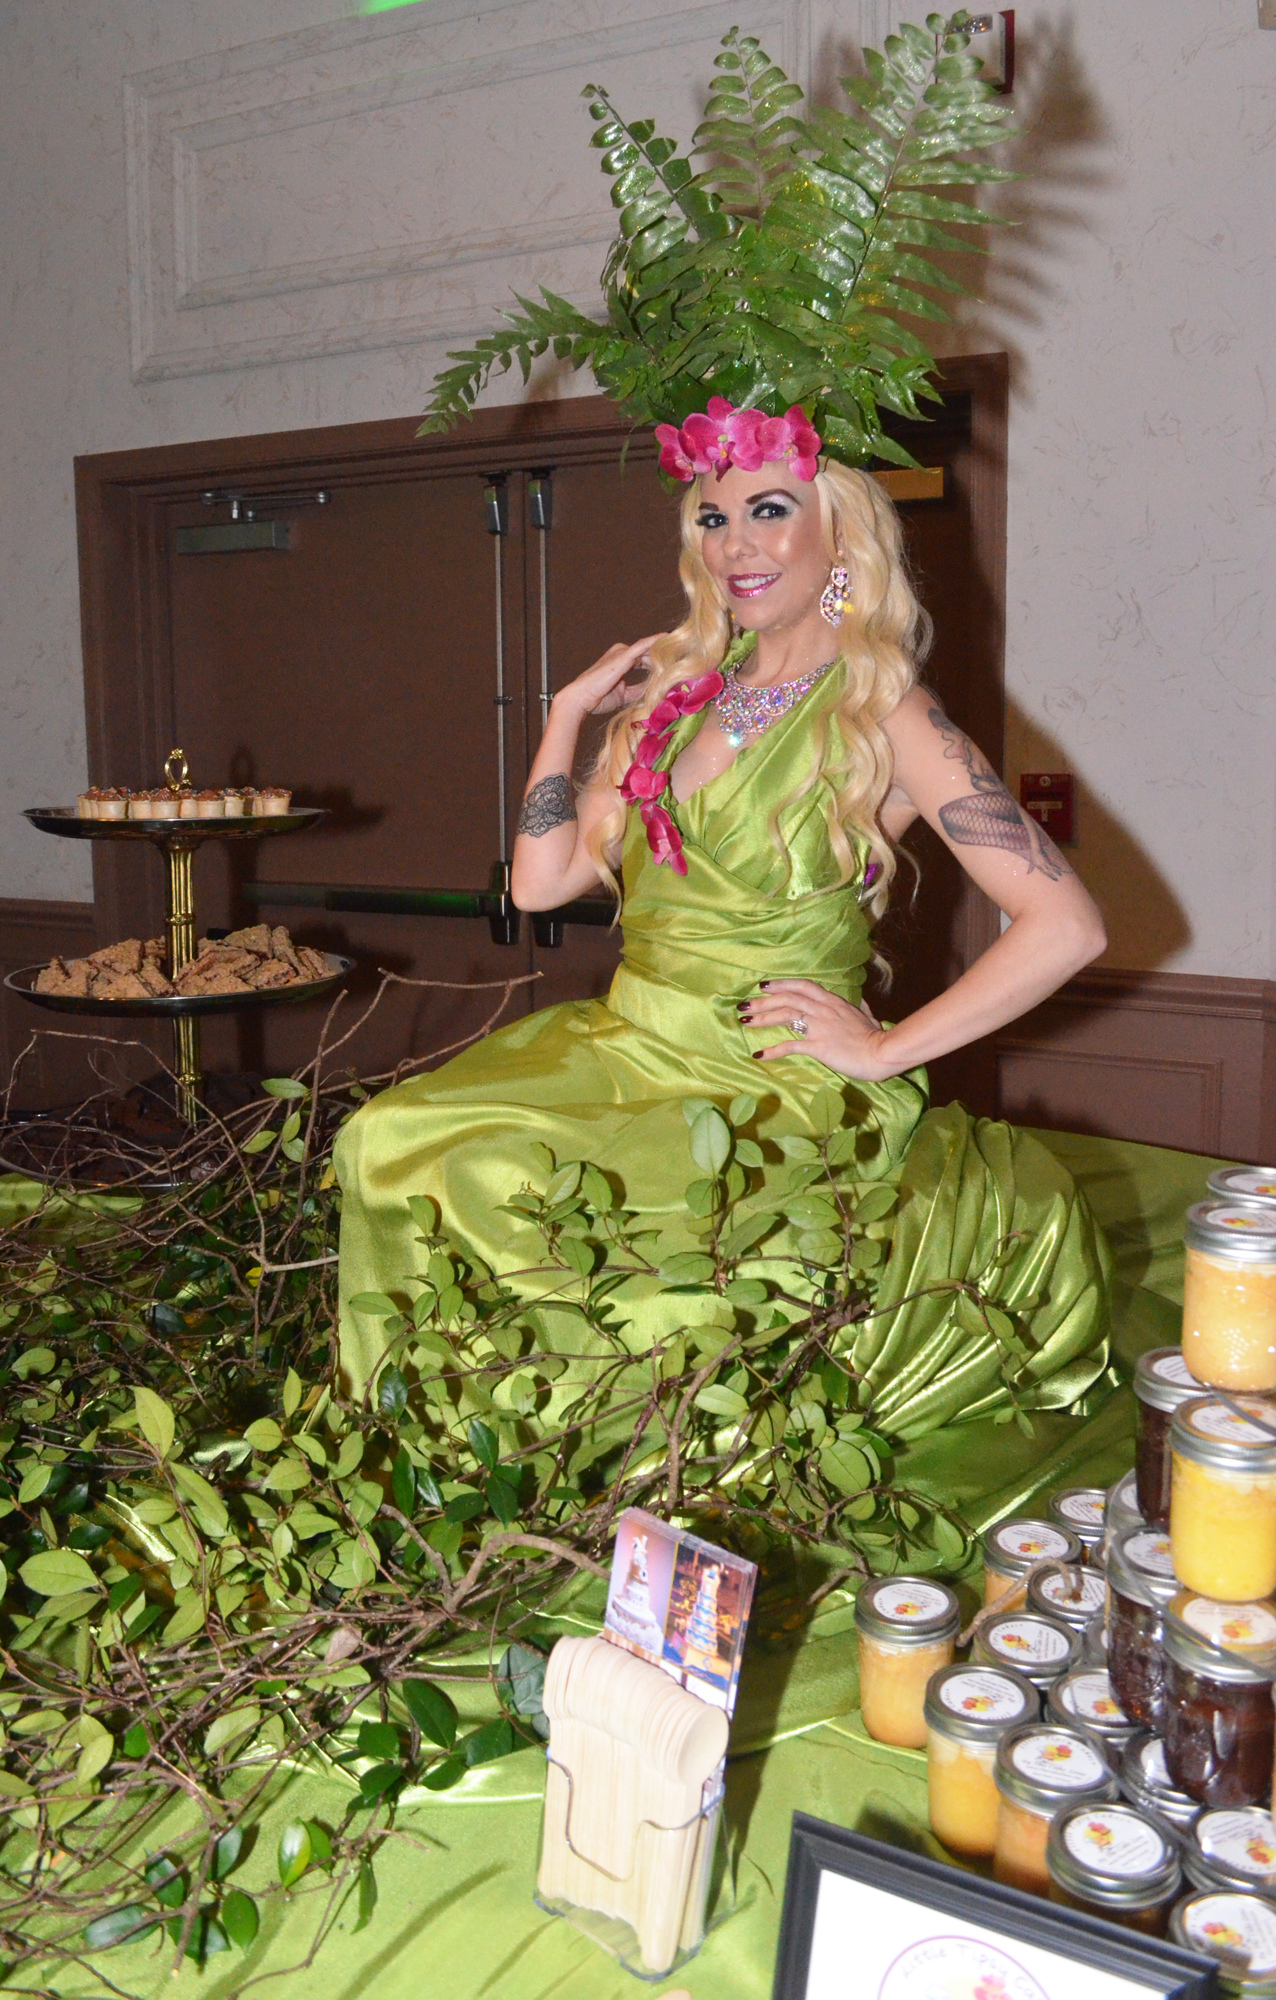 Virginia Hughes models as an enchanted forest figure on the dessert table. Photo by Niki Kottmann